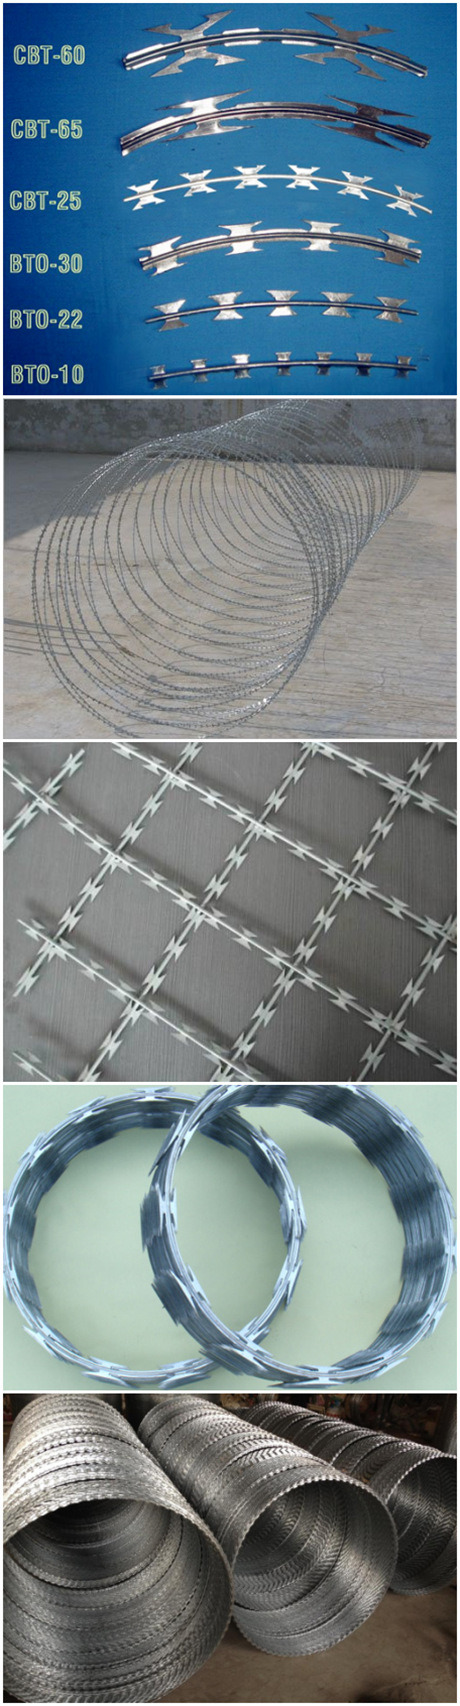 China Factory Sale Galvanized Razor Wire Fence